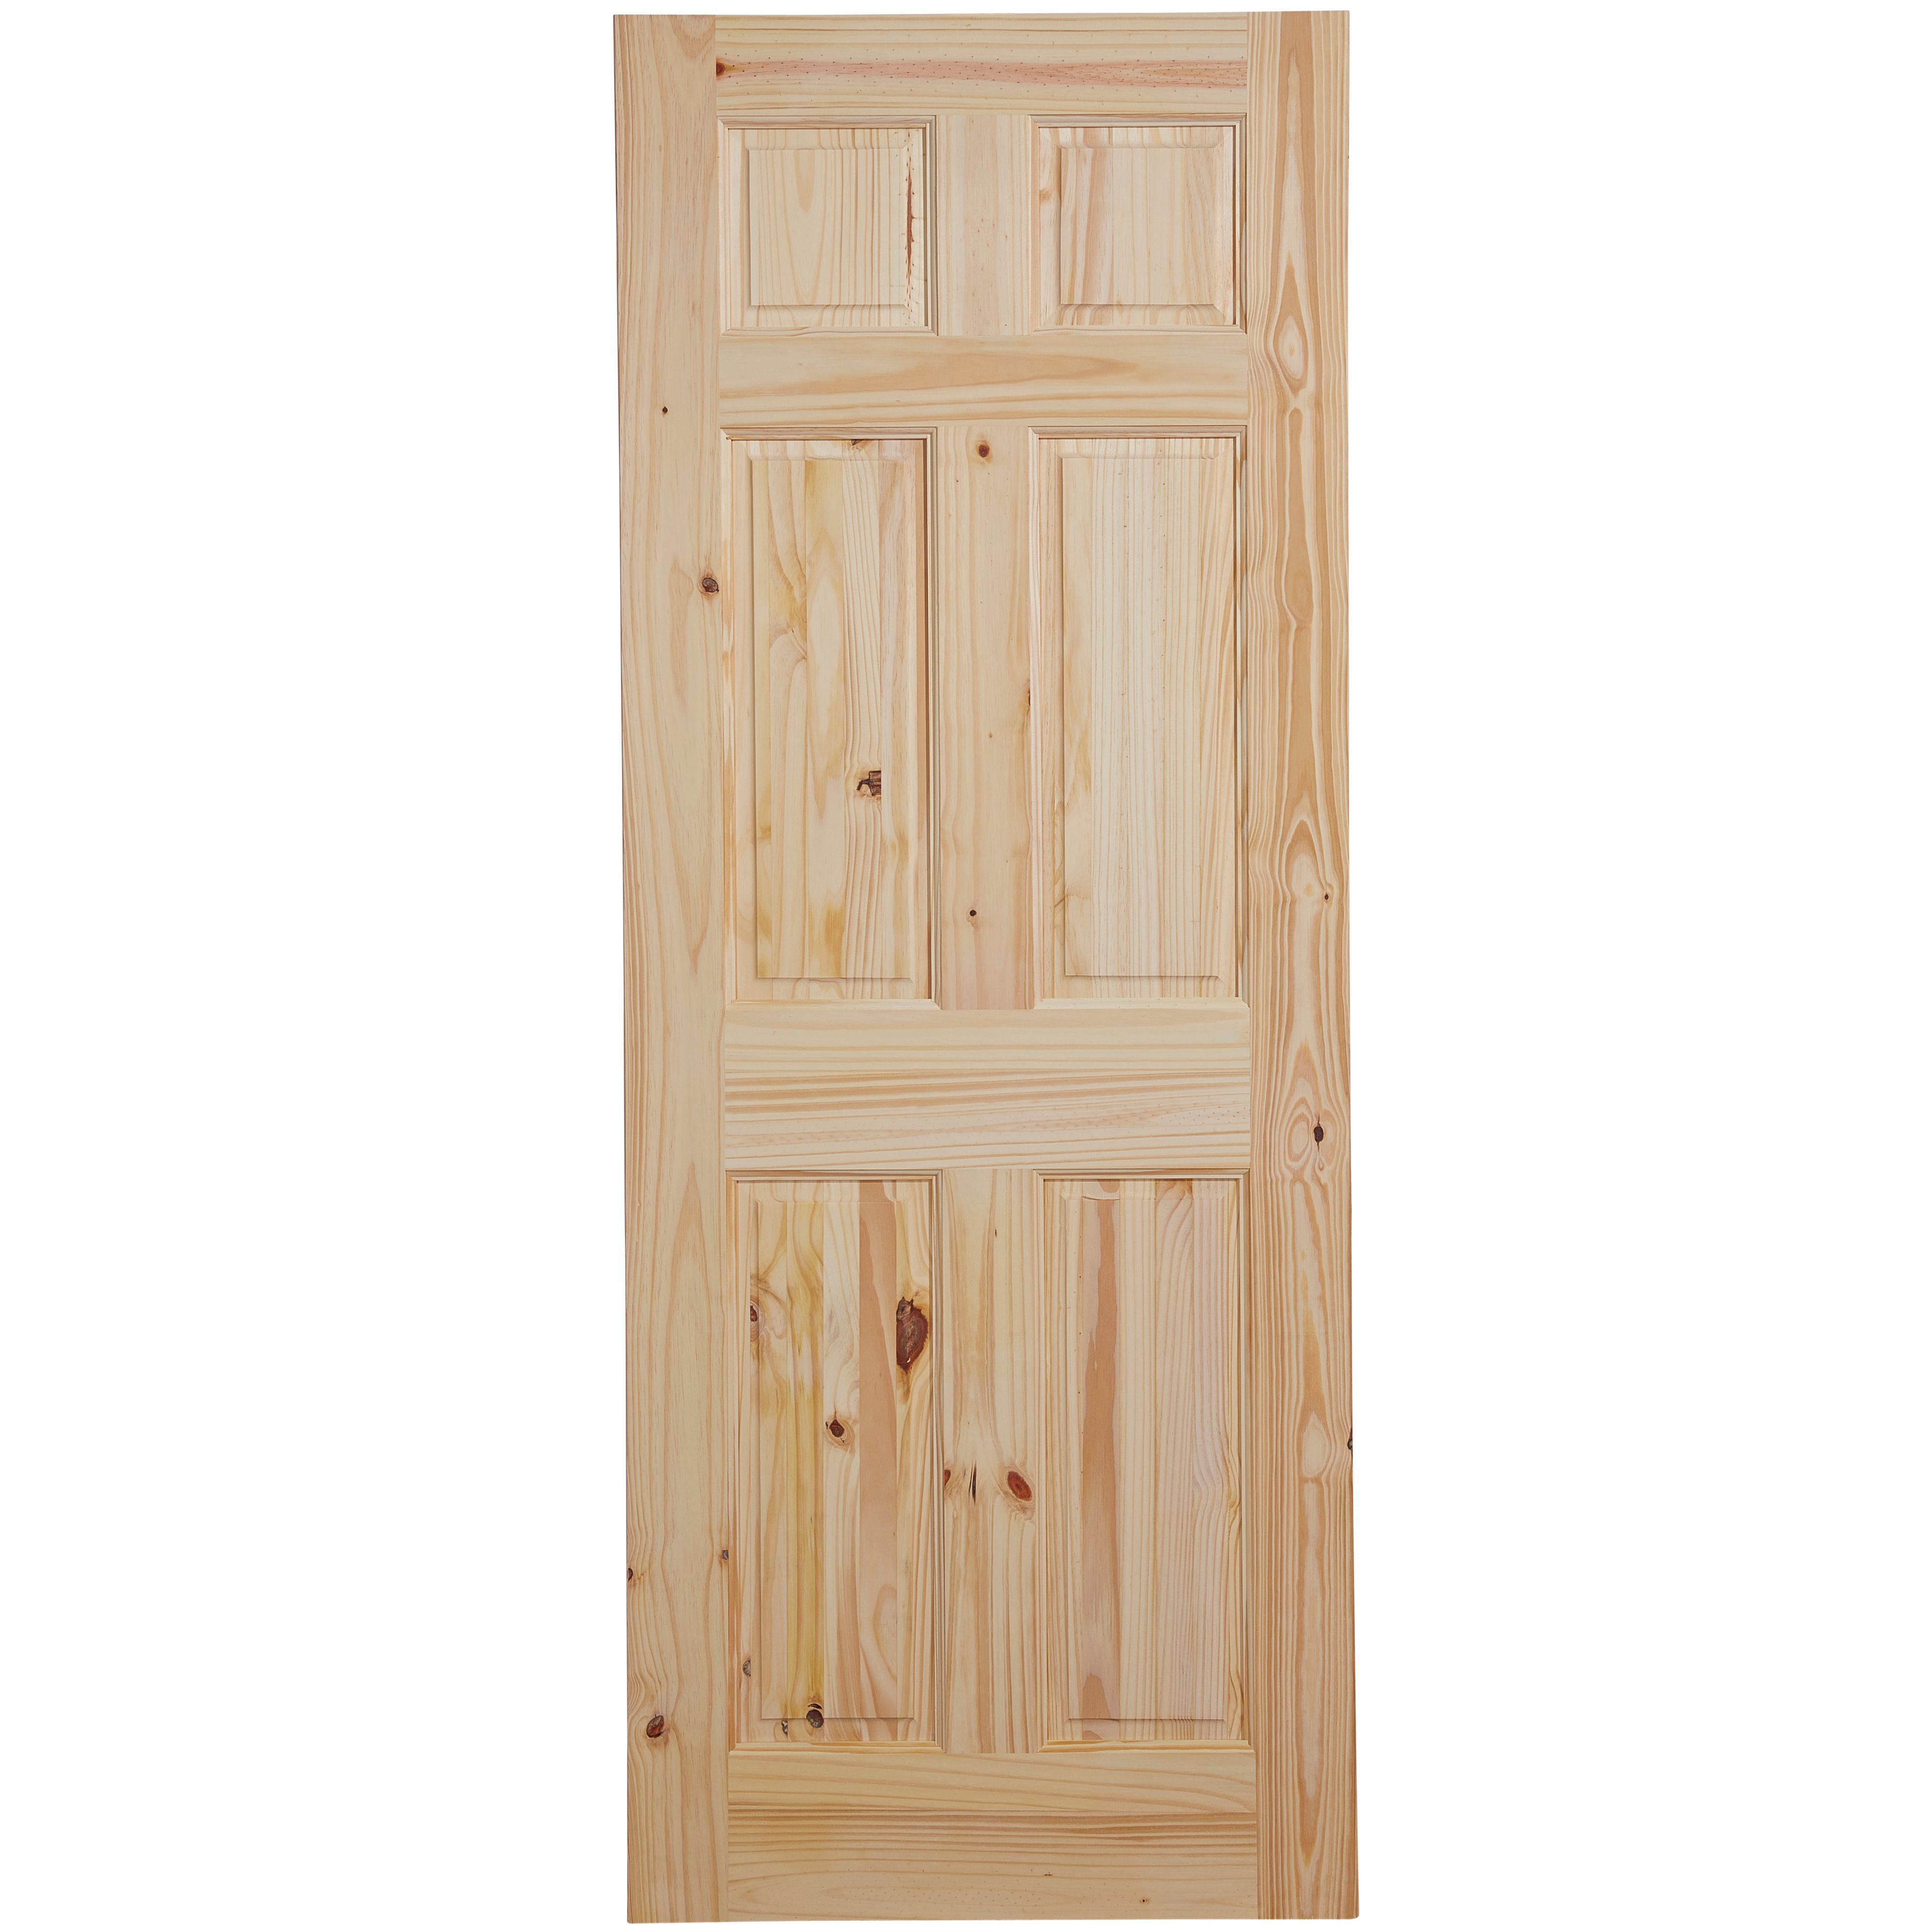 6 Panel Knotty Pine Lh Rh Internal Door H 1981mm W 762mm Departments Diy At B Q